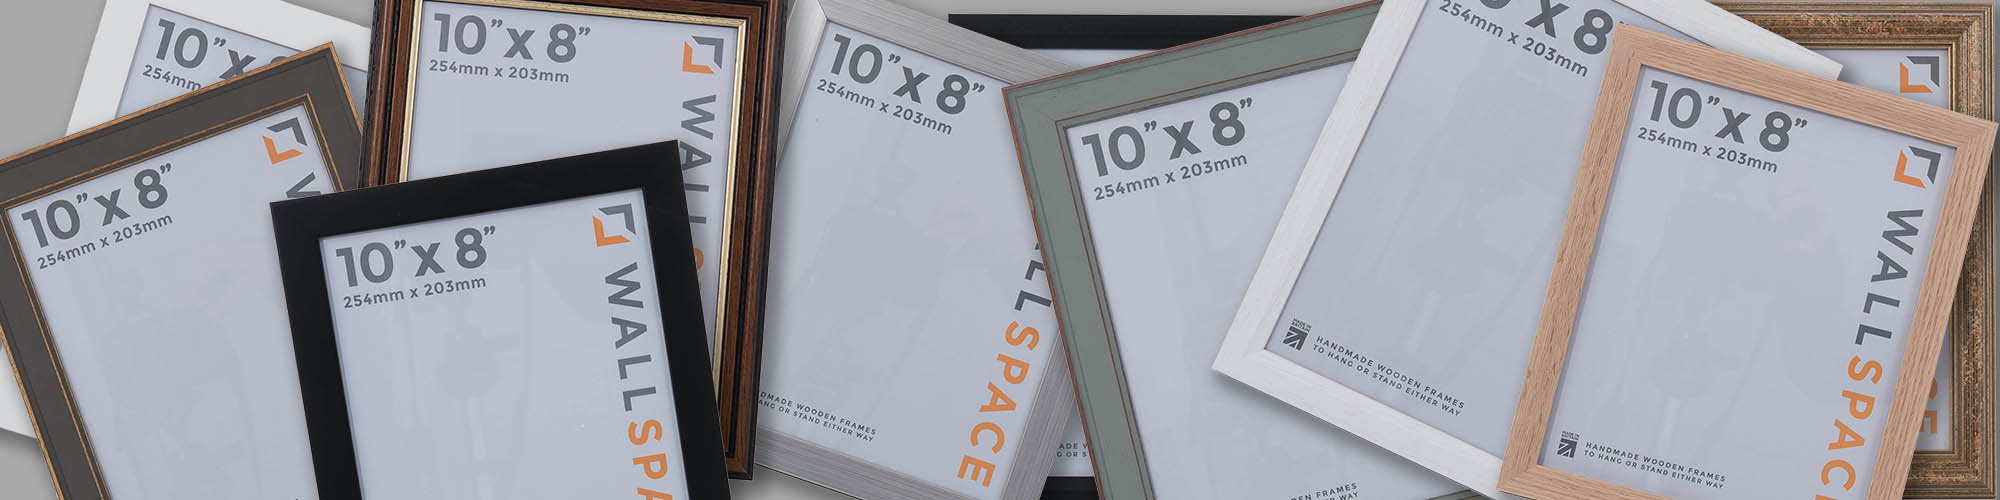 10" x 8" Photo Frames